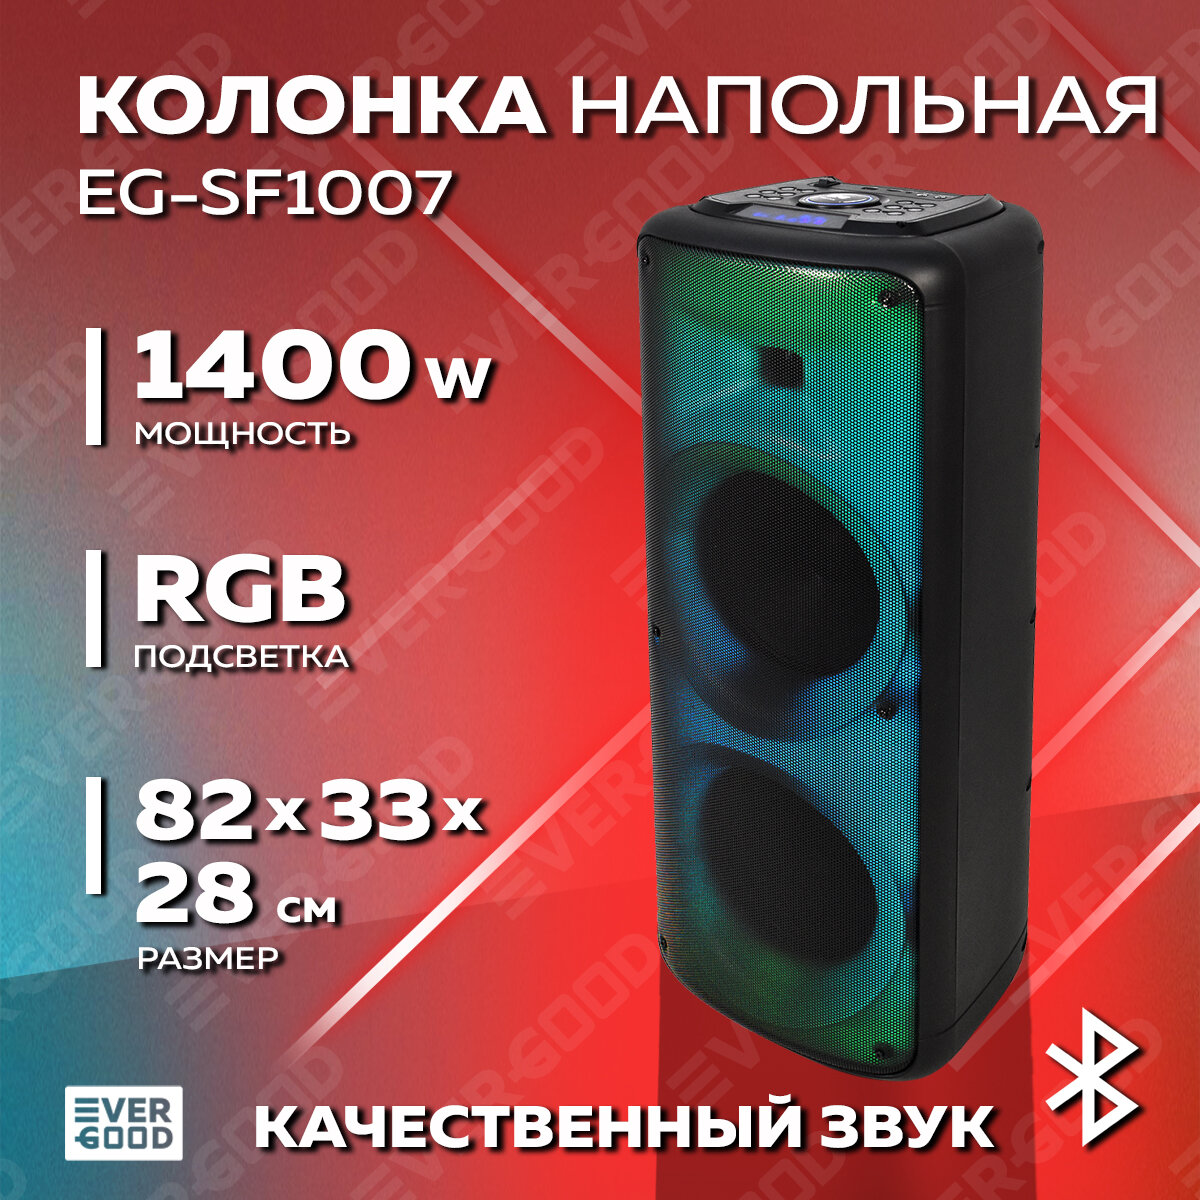 Колонка большая Bluetooth (140 Вт) EGSF1007 EVERGOOD